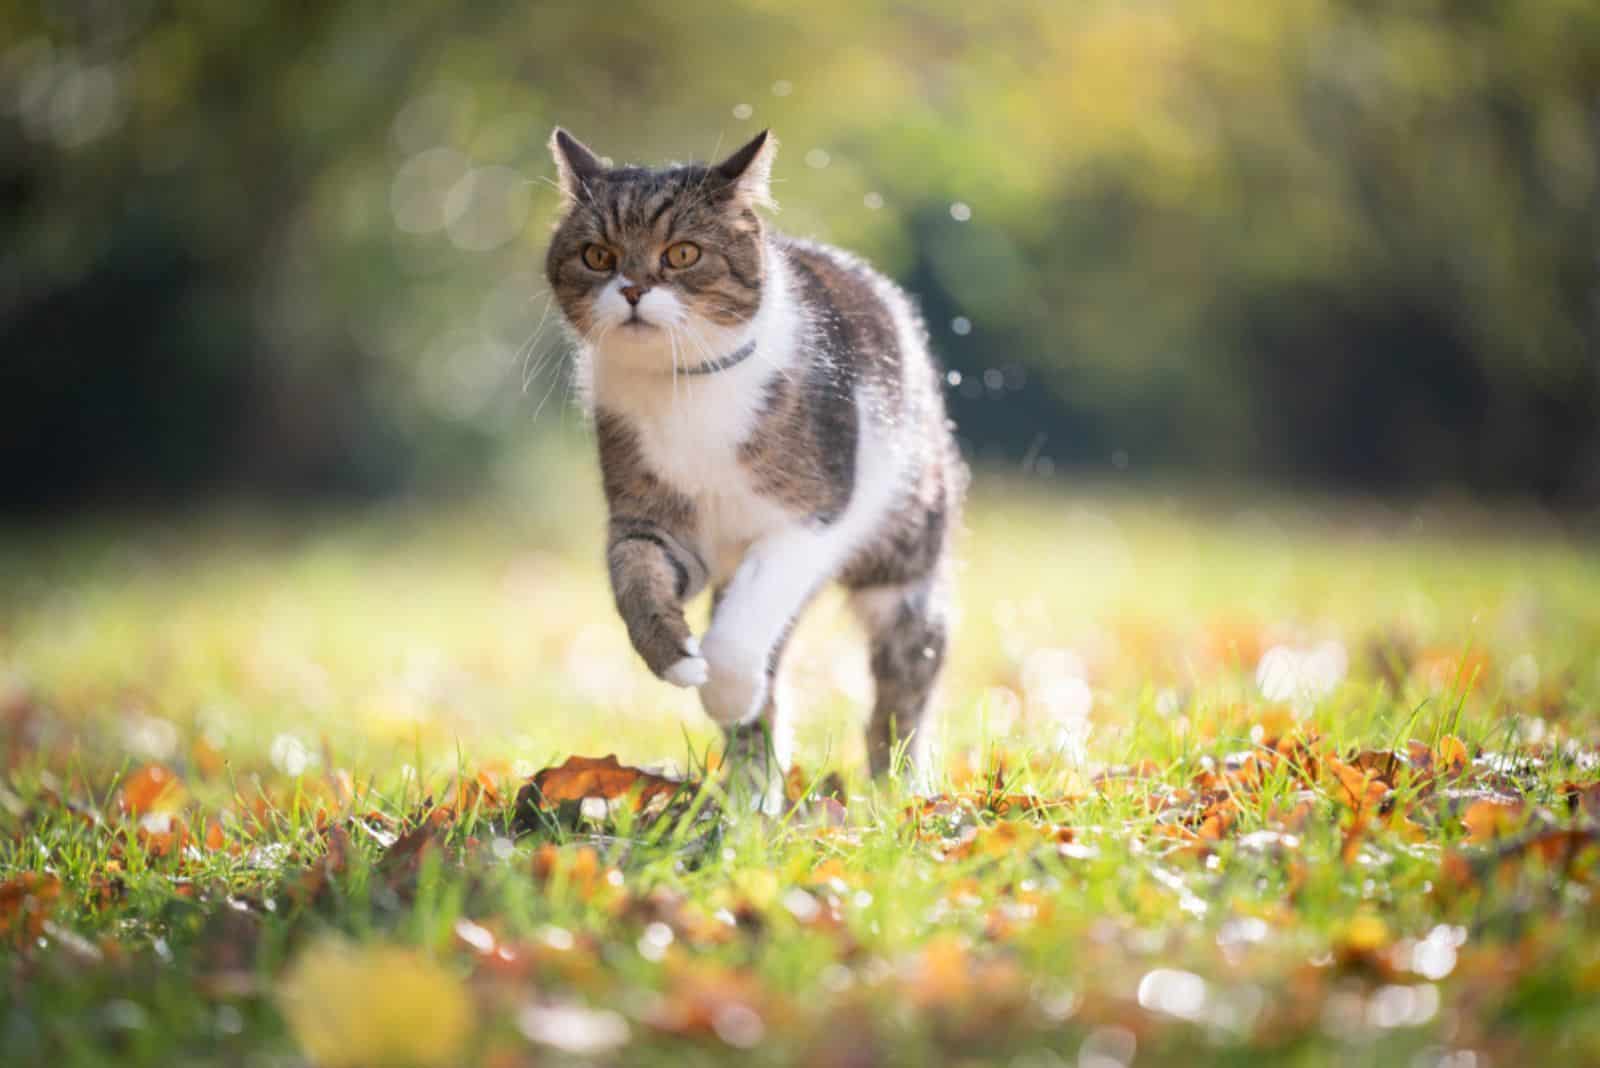 Ticked Tabby cat runs across the field